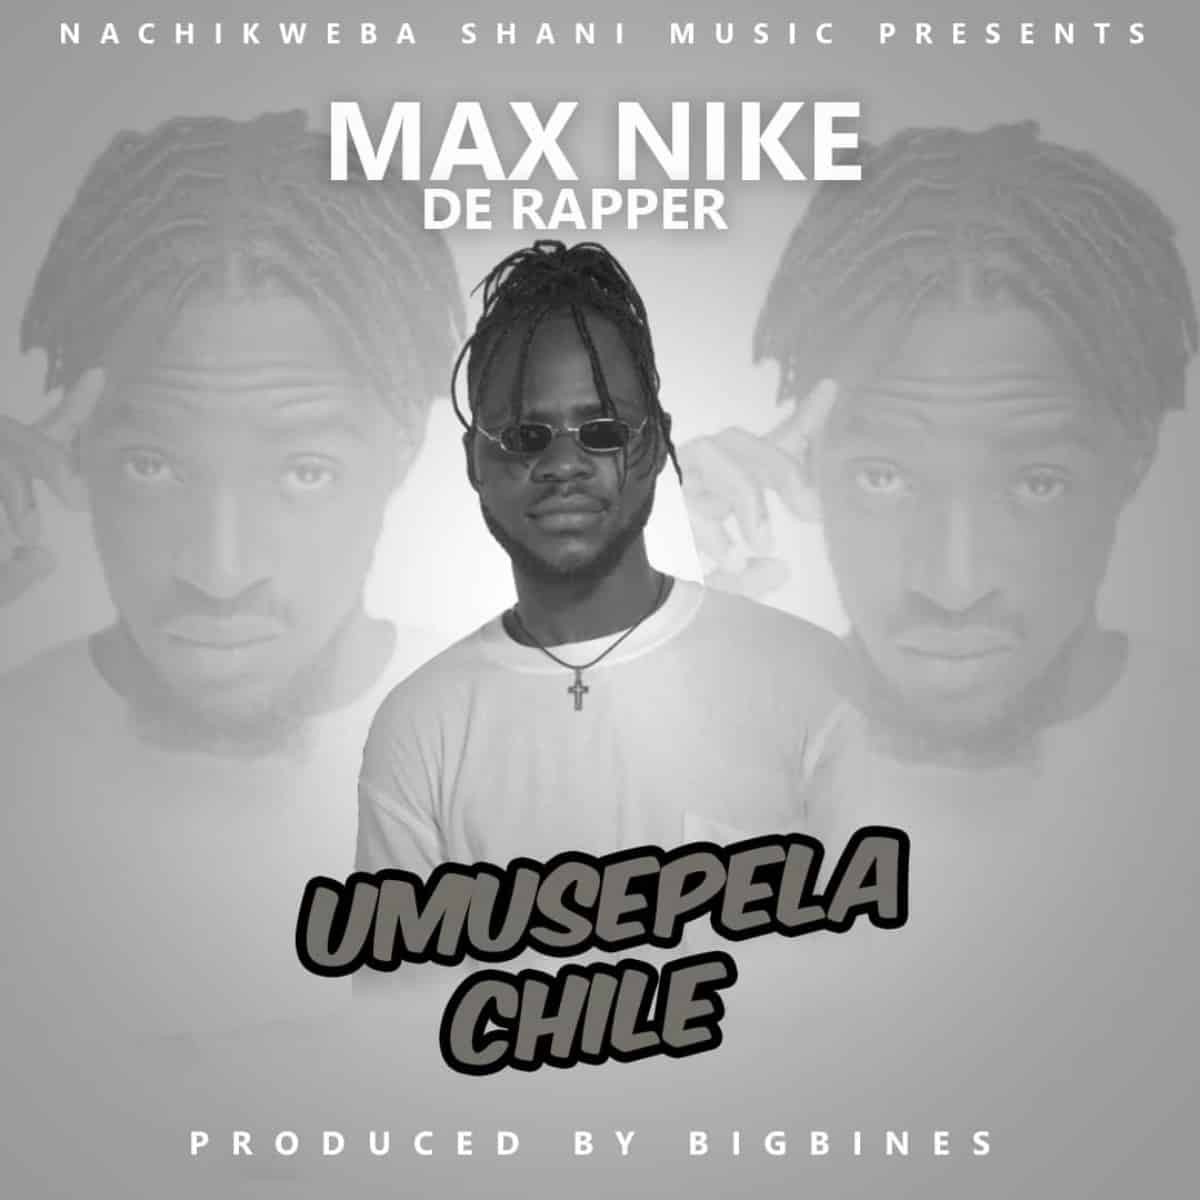 DOWNLOAD: Maxi The Rapper – “Umusepela Chile” Mp3